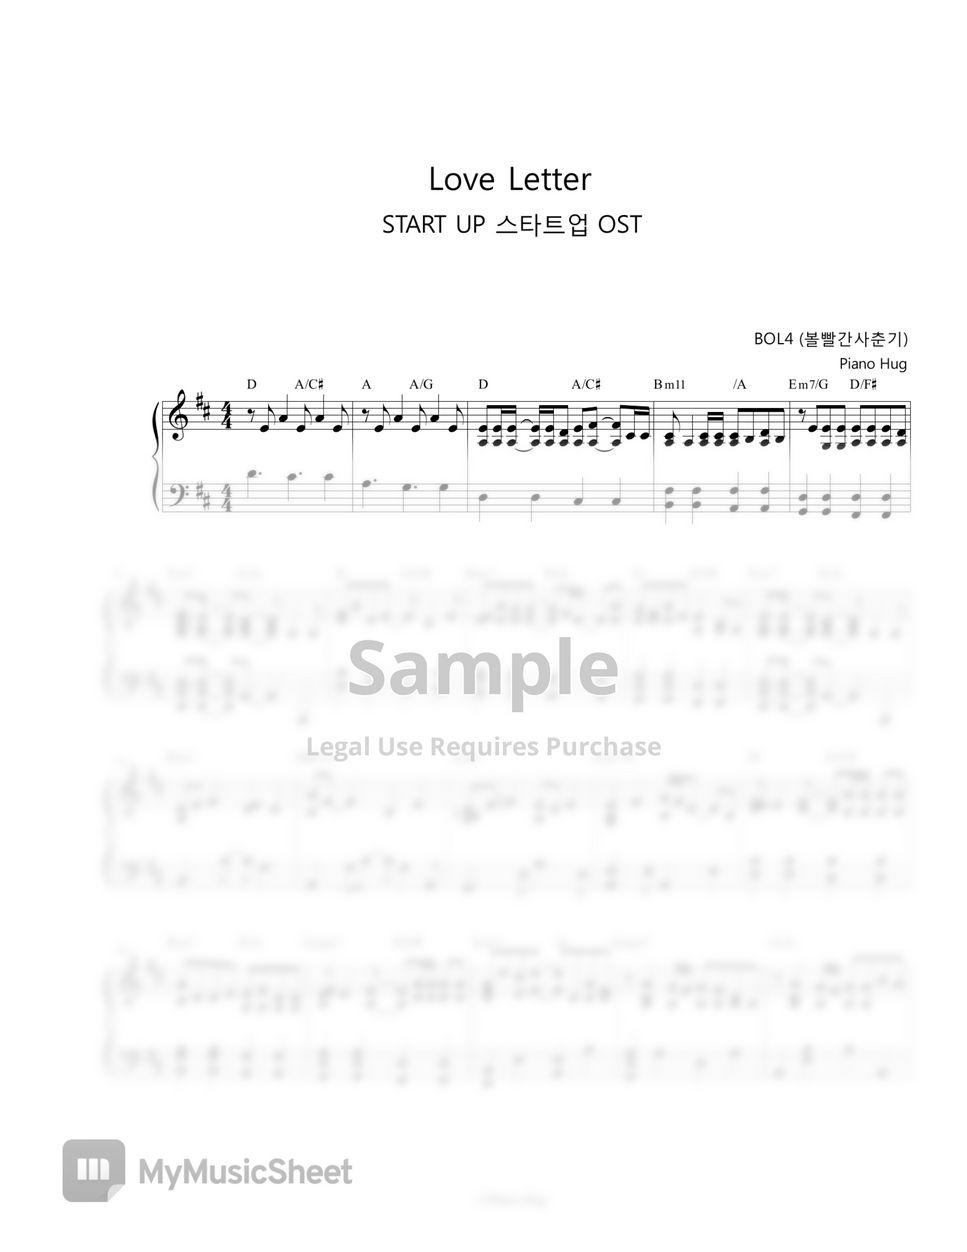 BOL4 (볼빨간사춘기) - Love Letter (START UP OST) by Piano Hug